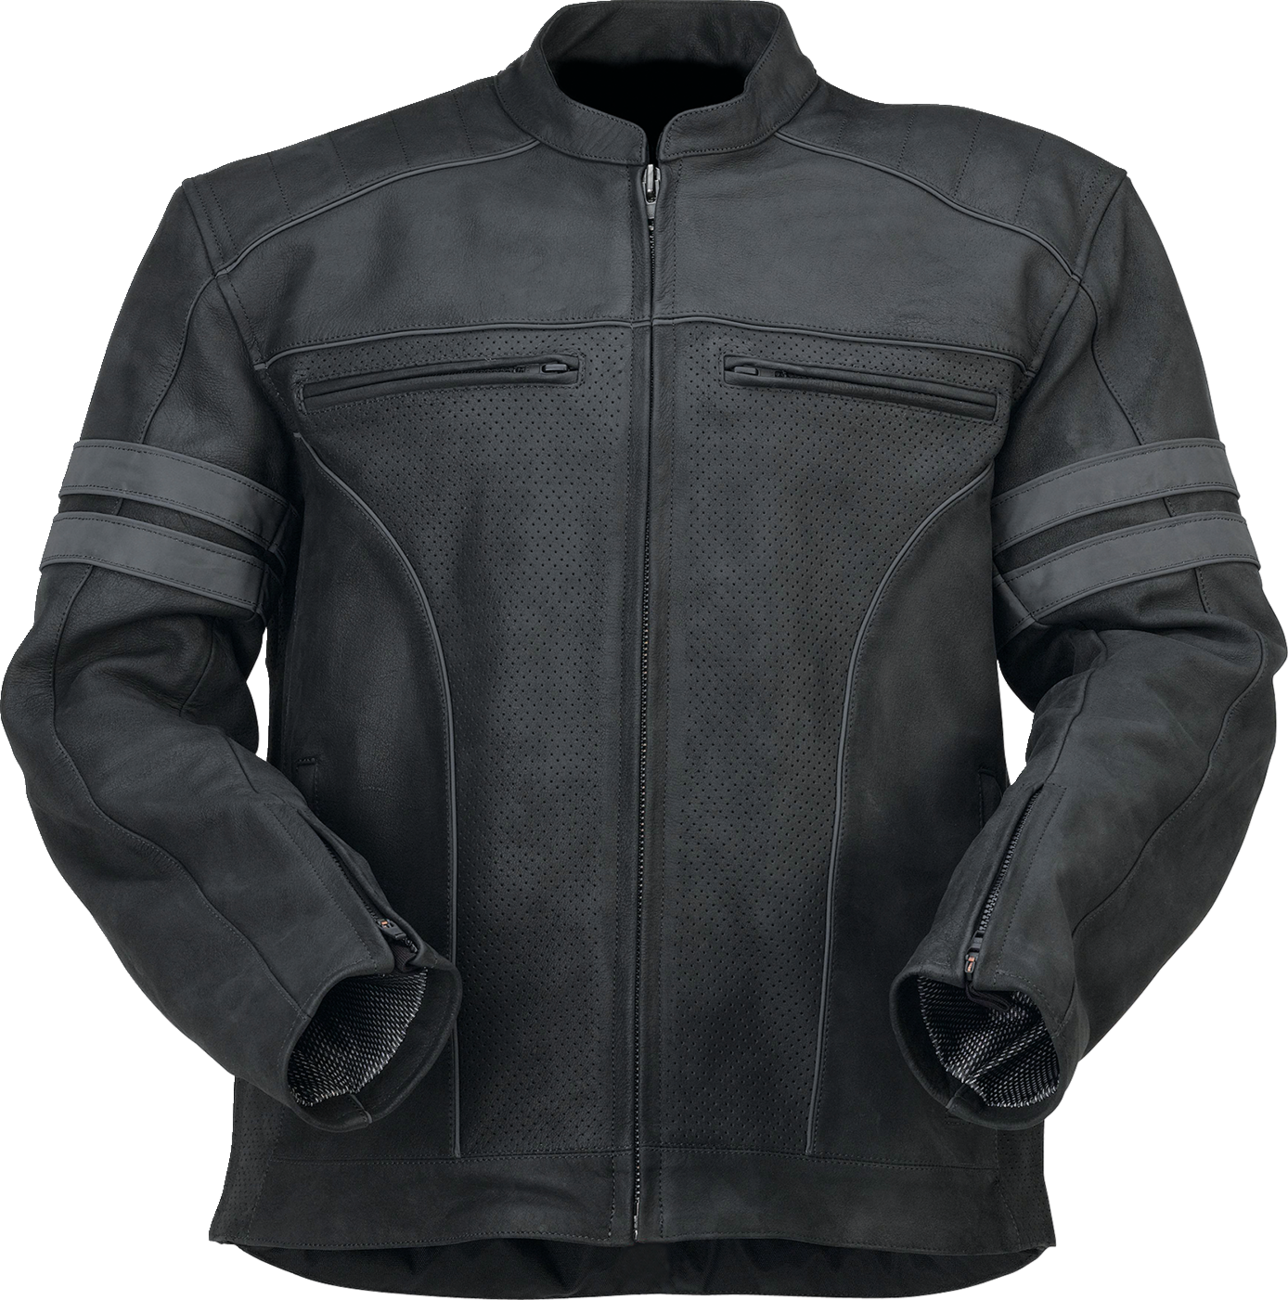 Z1R Remedy Leather Jacket - Black - Large 2810-3891